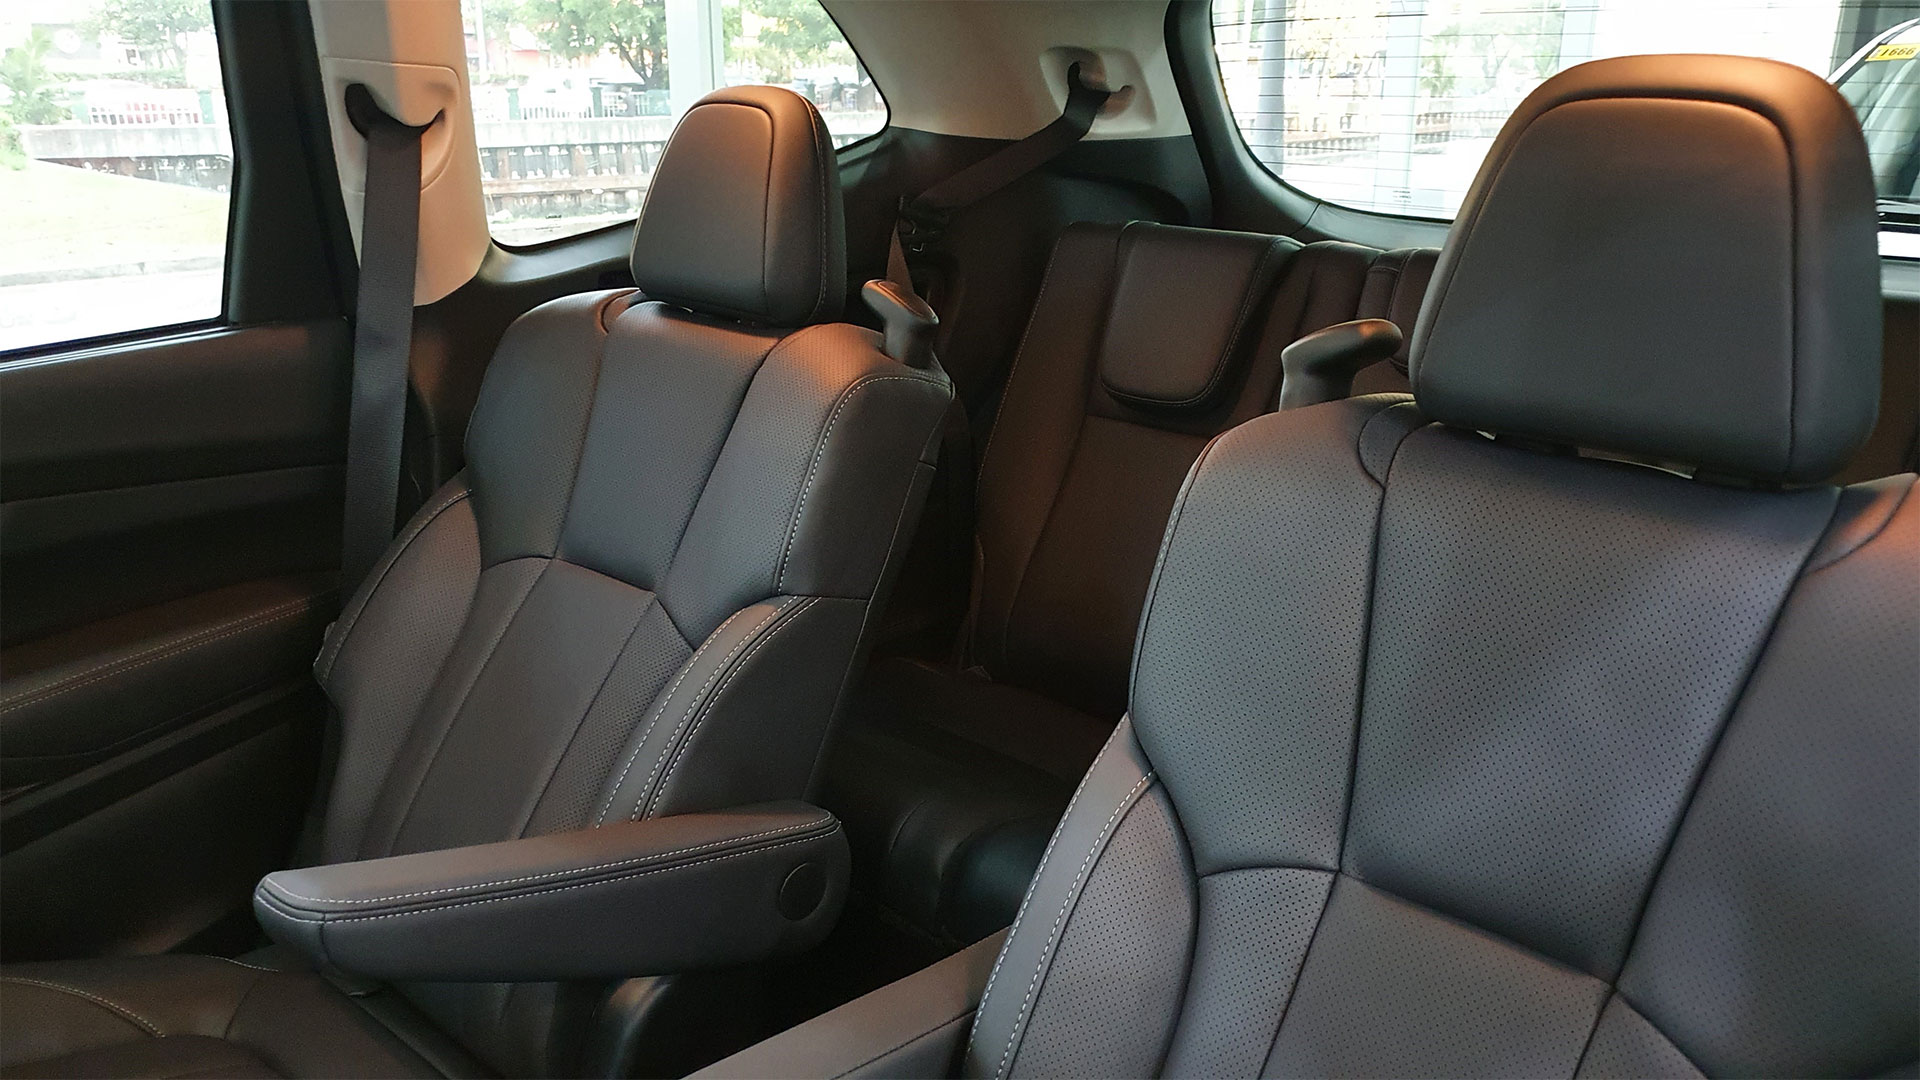 The Subaru Evoltis Rear Passenger Seats